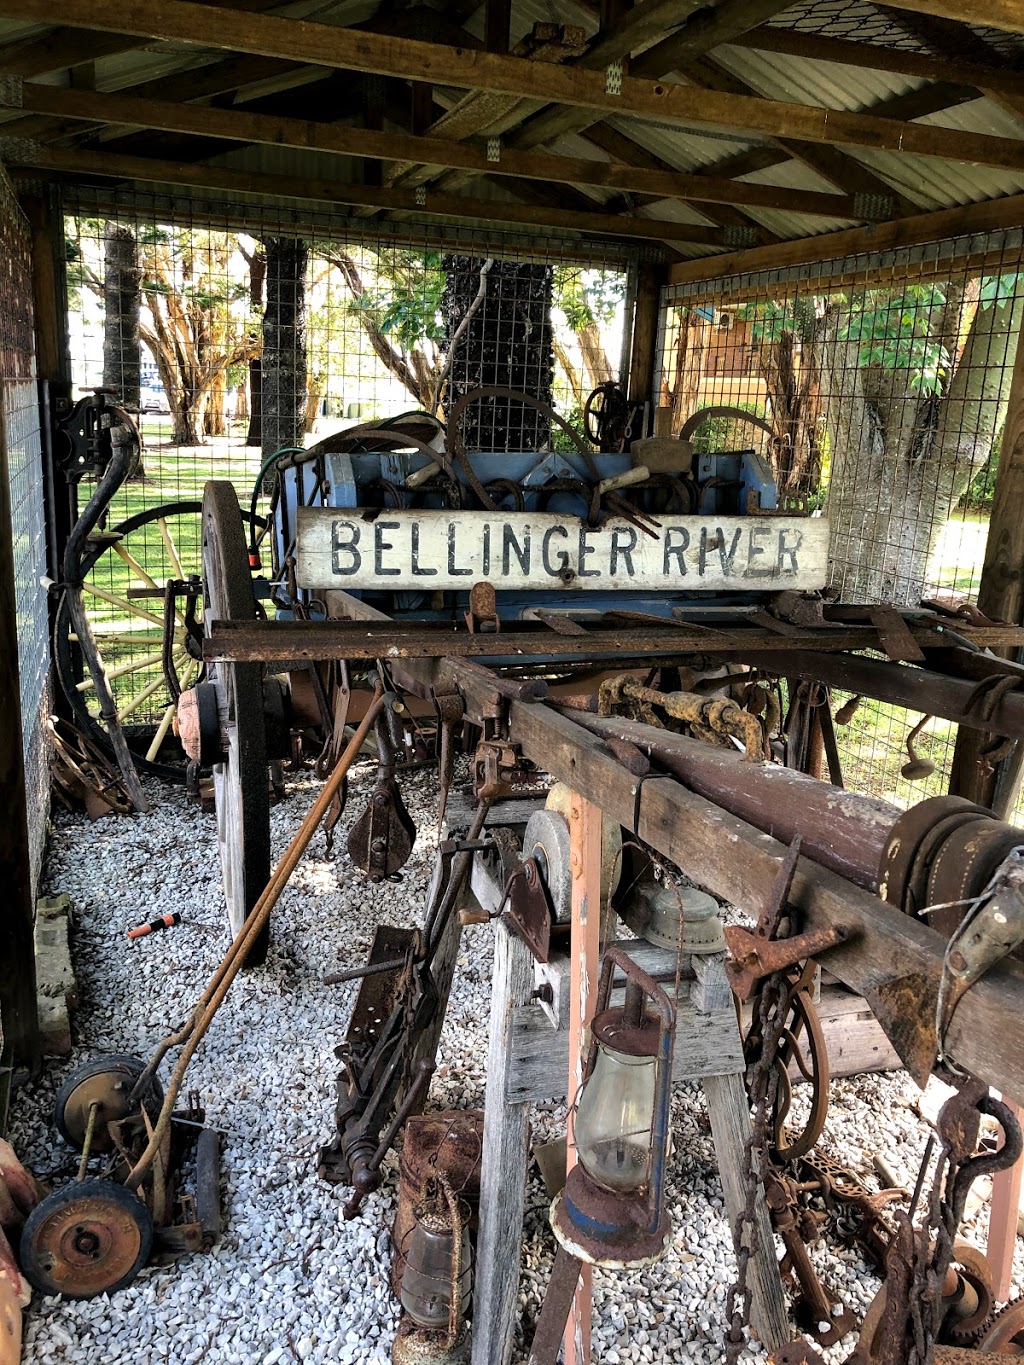 Urunga Museum - Bellinger Valley Historical Society | museum | 33 Morgo St, Urunga NSW 2455, Australia